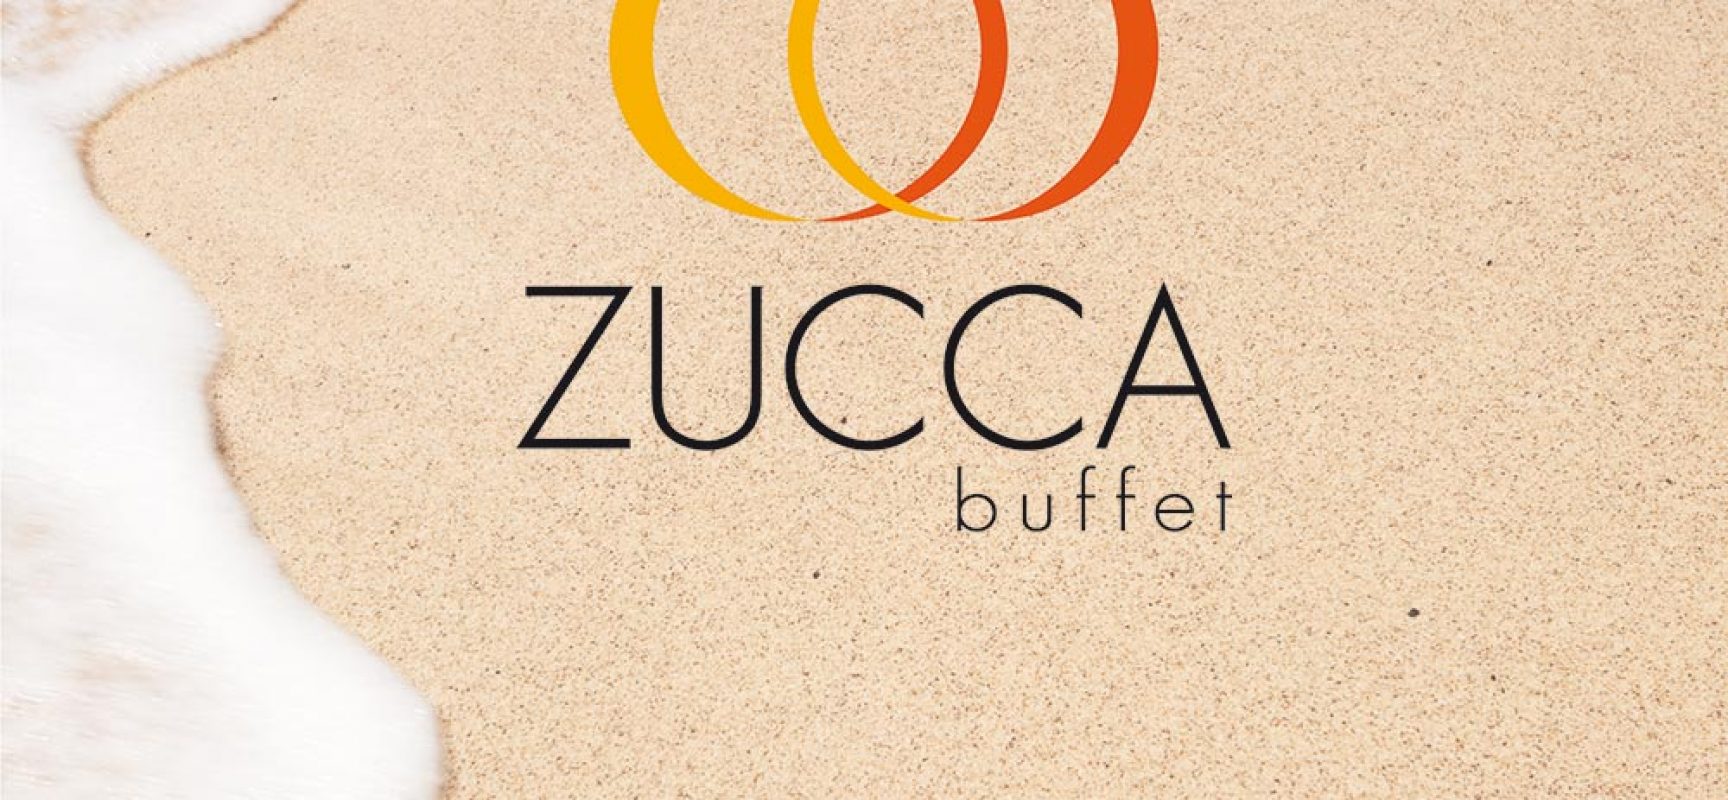 Especial #casarnapraia  Zucca Buffet